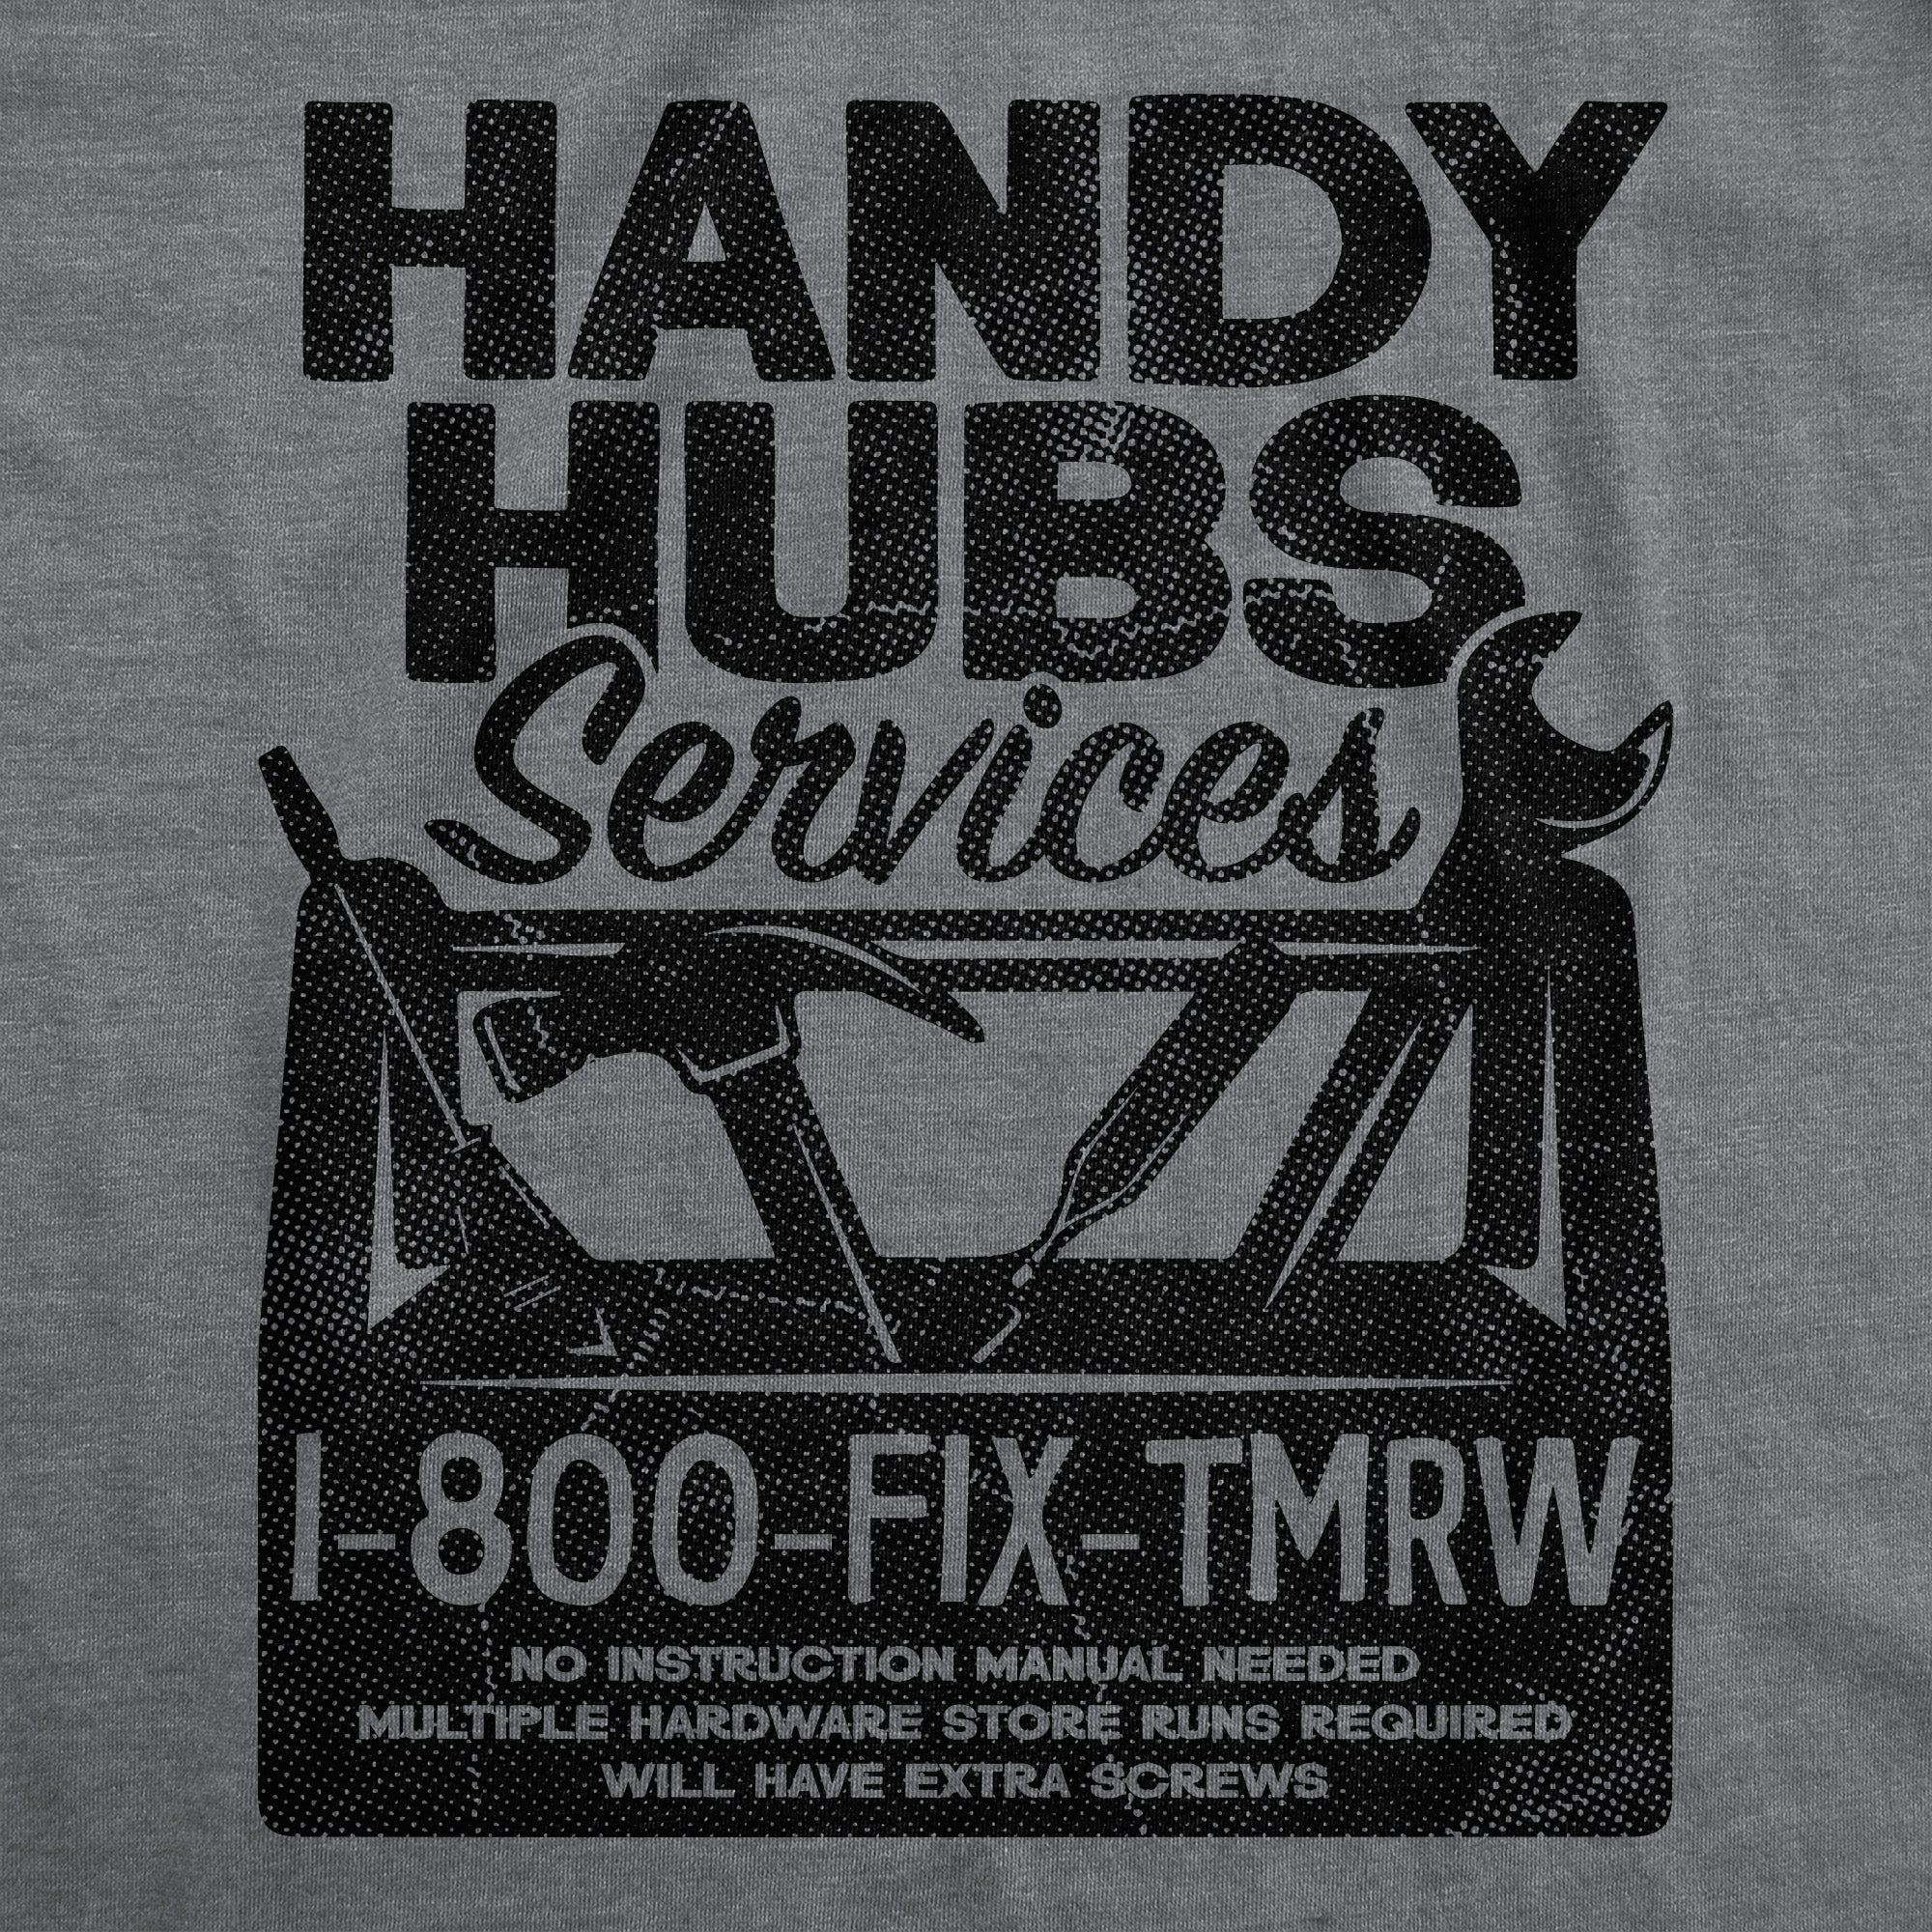 Funny Dark Heather Grey - HANDY Handy Hubs Services Mens T Shirt Nerdy Sarcastic Tee